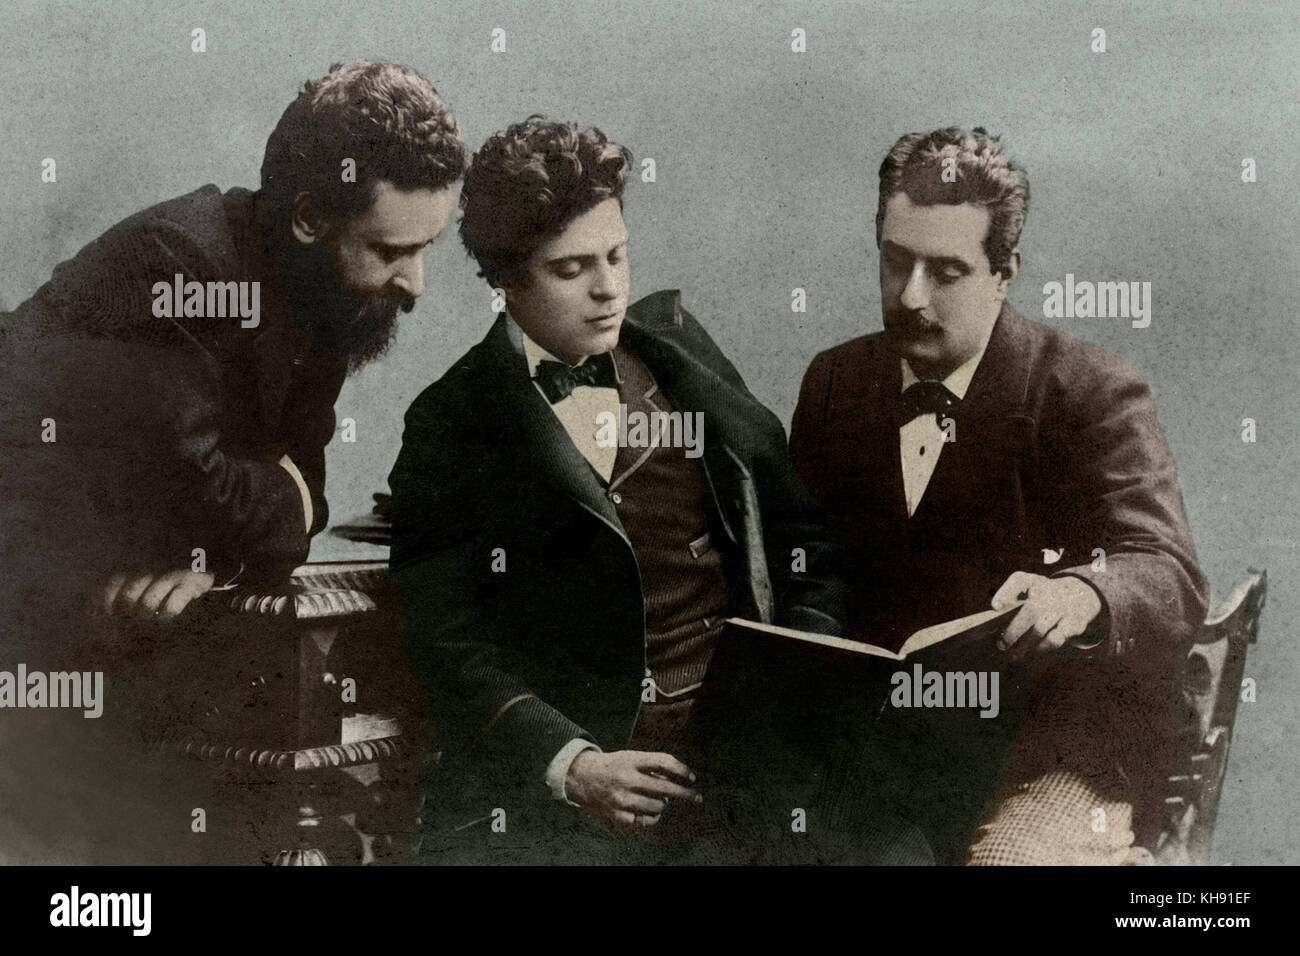 Giacomo Puccini, Pietro Mascagni & Alberto Franchetti. The three Italian opera composers looking at a score, sitting around a piano. Dates are respectively: 1858-1924, 1863-1945, 1860-1942. Stock Photo